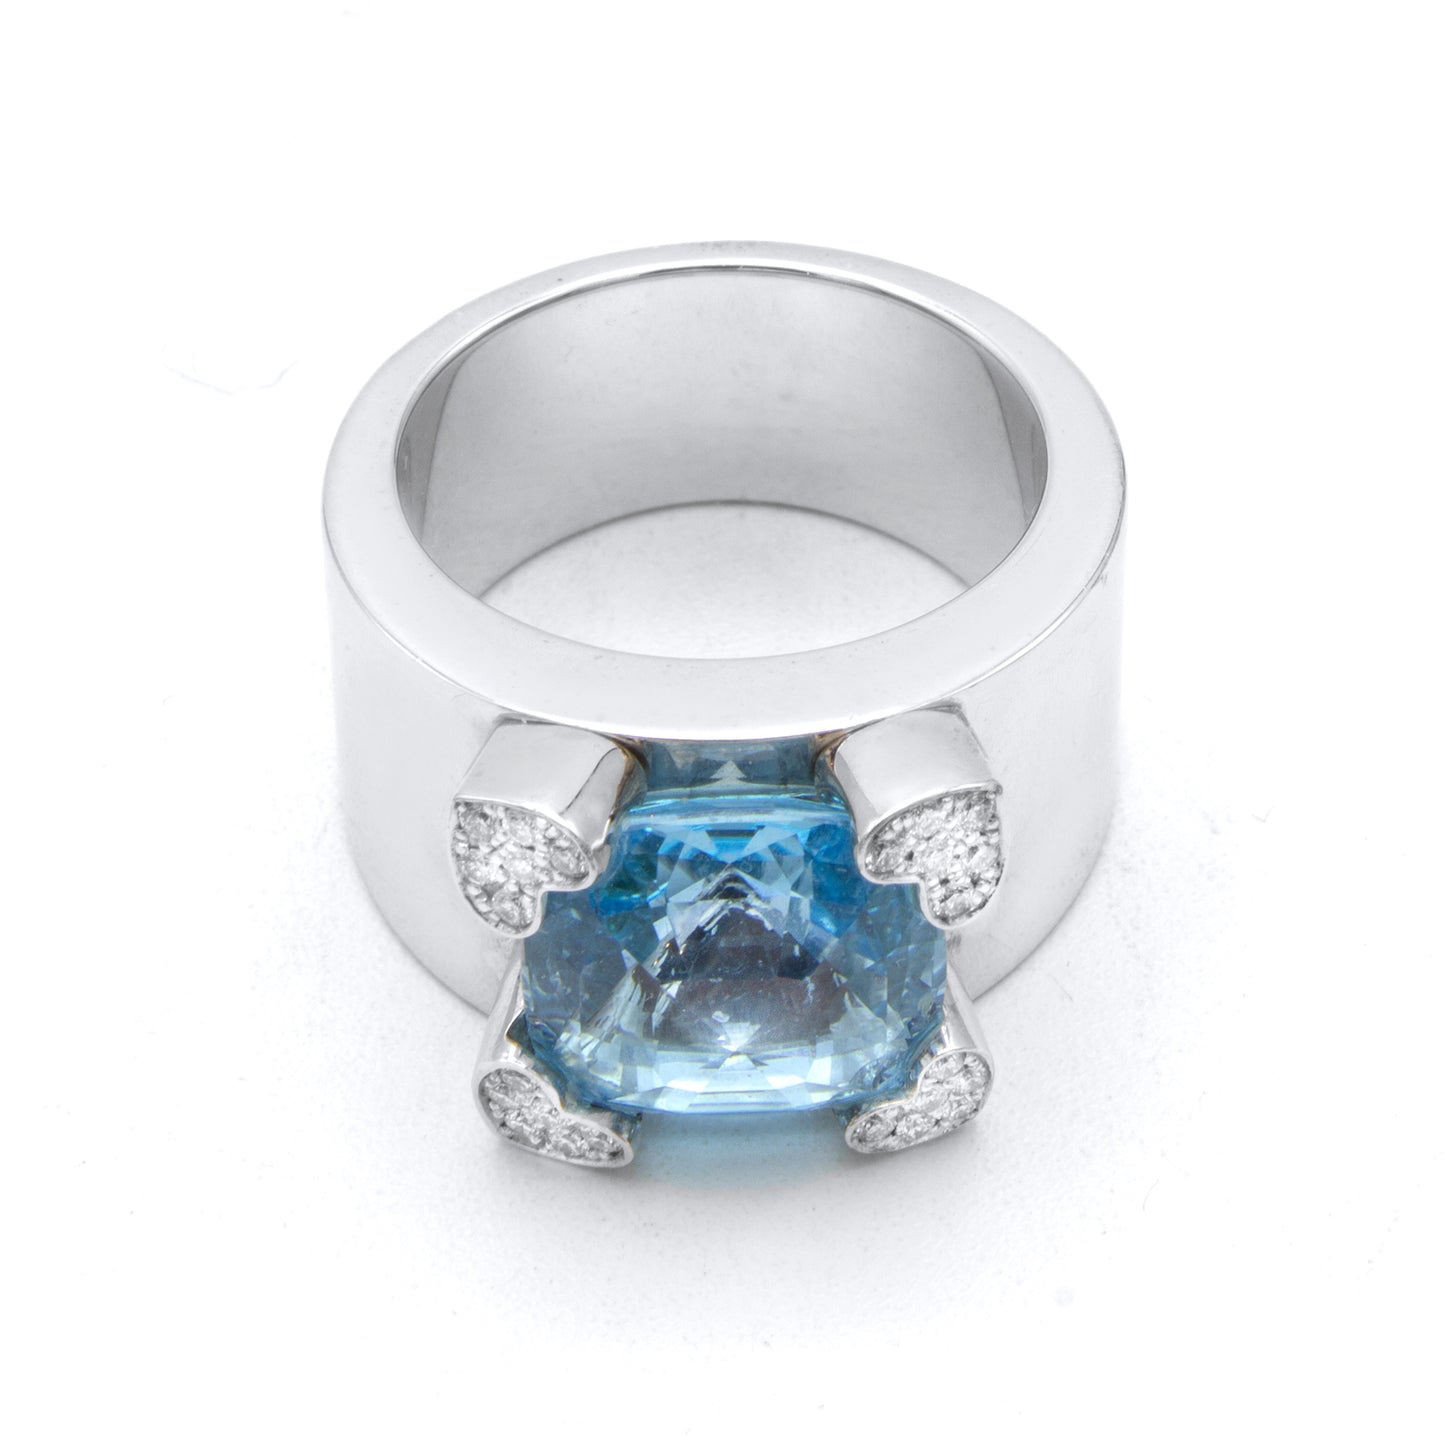 Chopard blue topaz ring